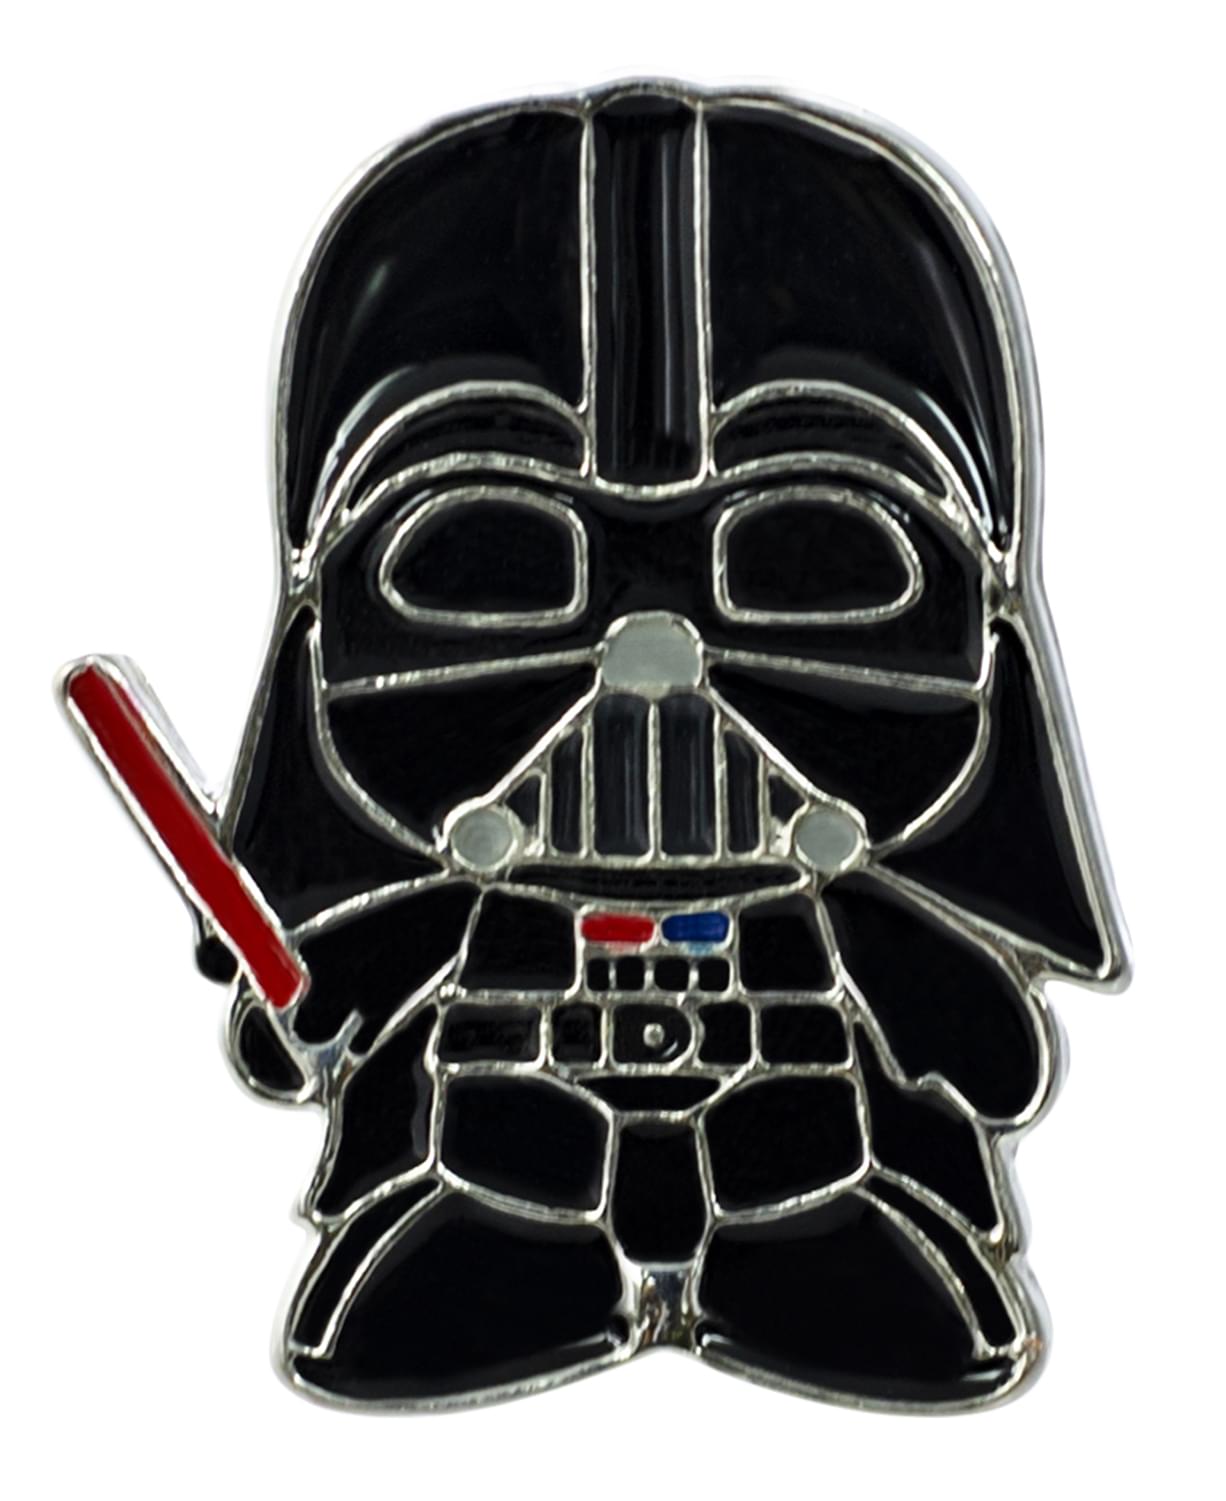 Star Wars Darth Vader Stylized 7 Inch Plush With Enamel Pin